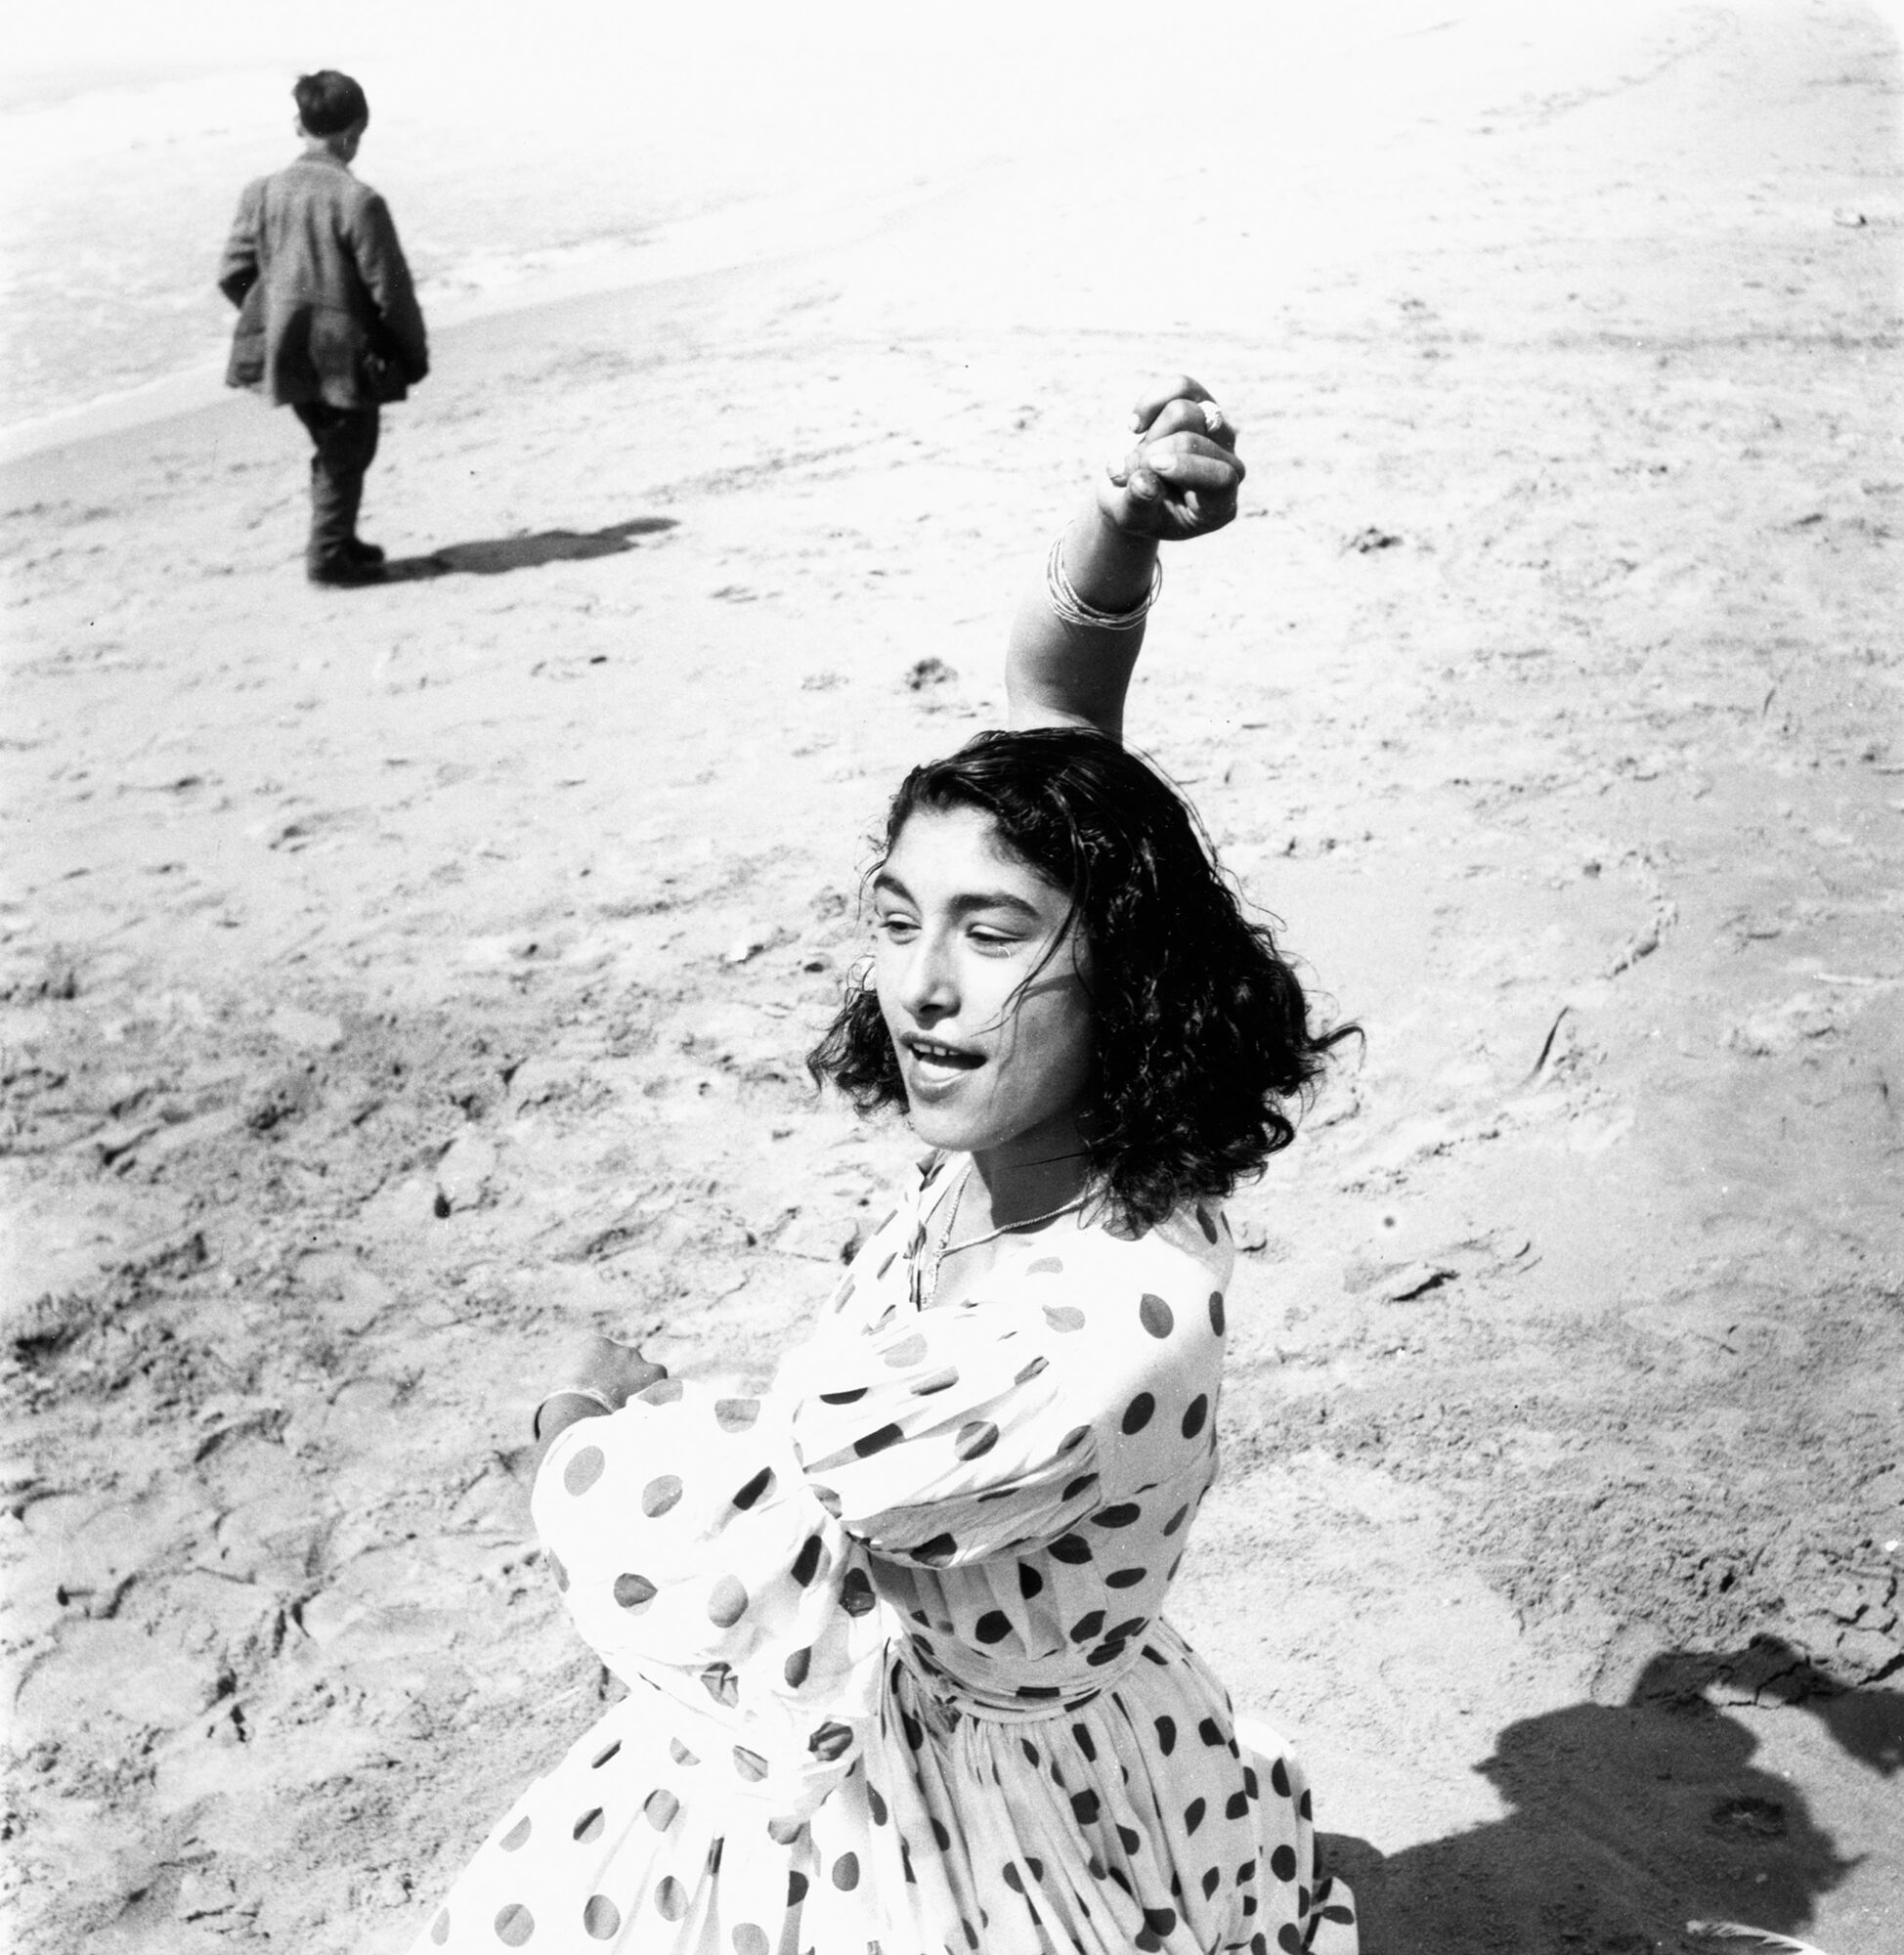 <span class="u-italic400">Draga in Polka Dot Dress, Saintes Maries de la Mer</span> 1957
© Atelier Lucien Clergue